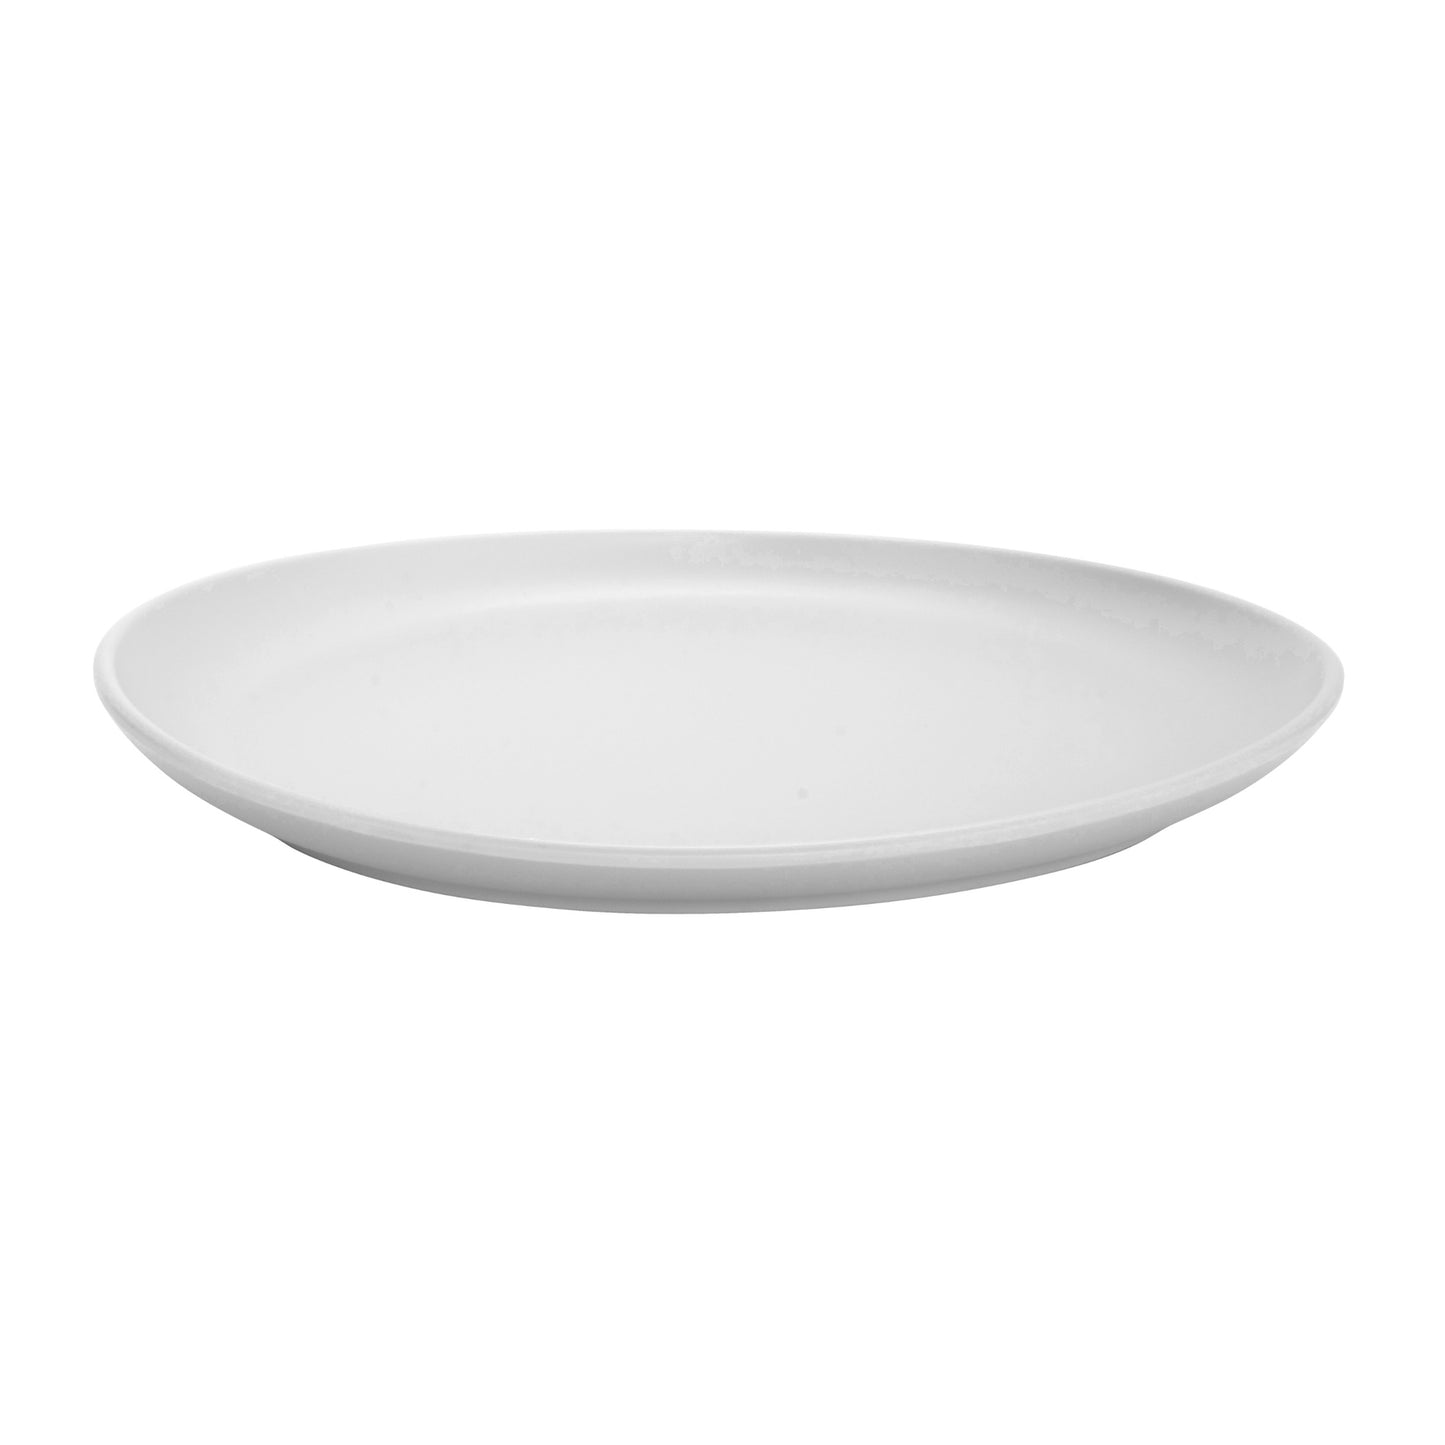 10.6" White, Melamine, Round Coupe Dinner Plate, G.E.T. Riverstone (12 Pack)